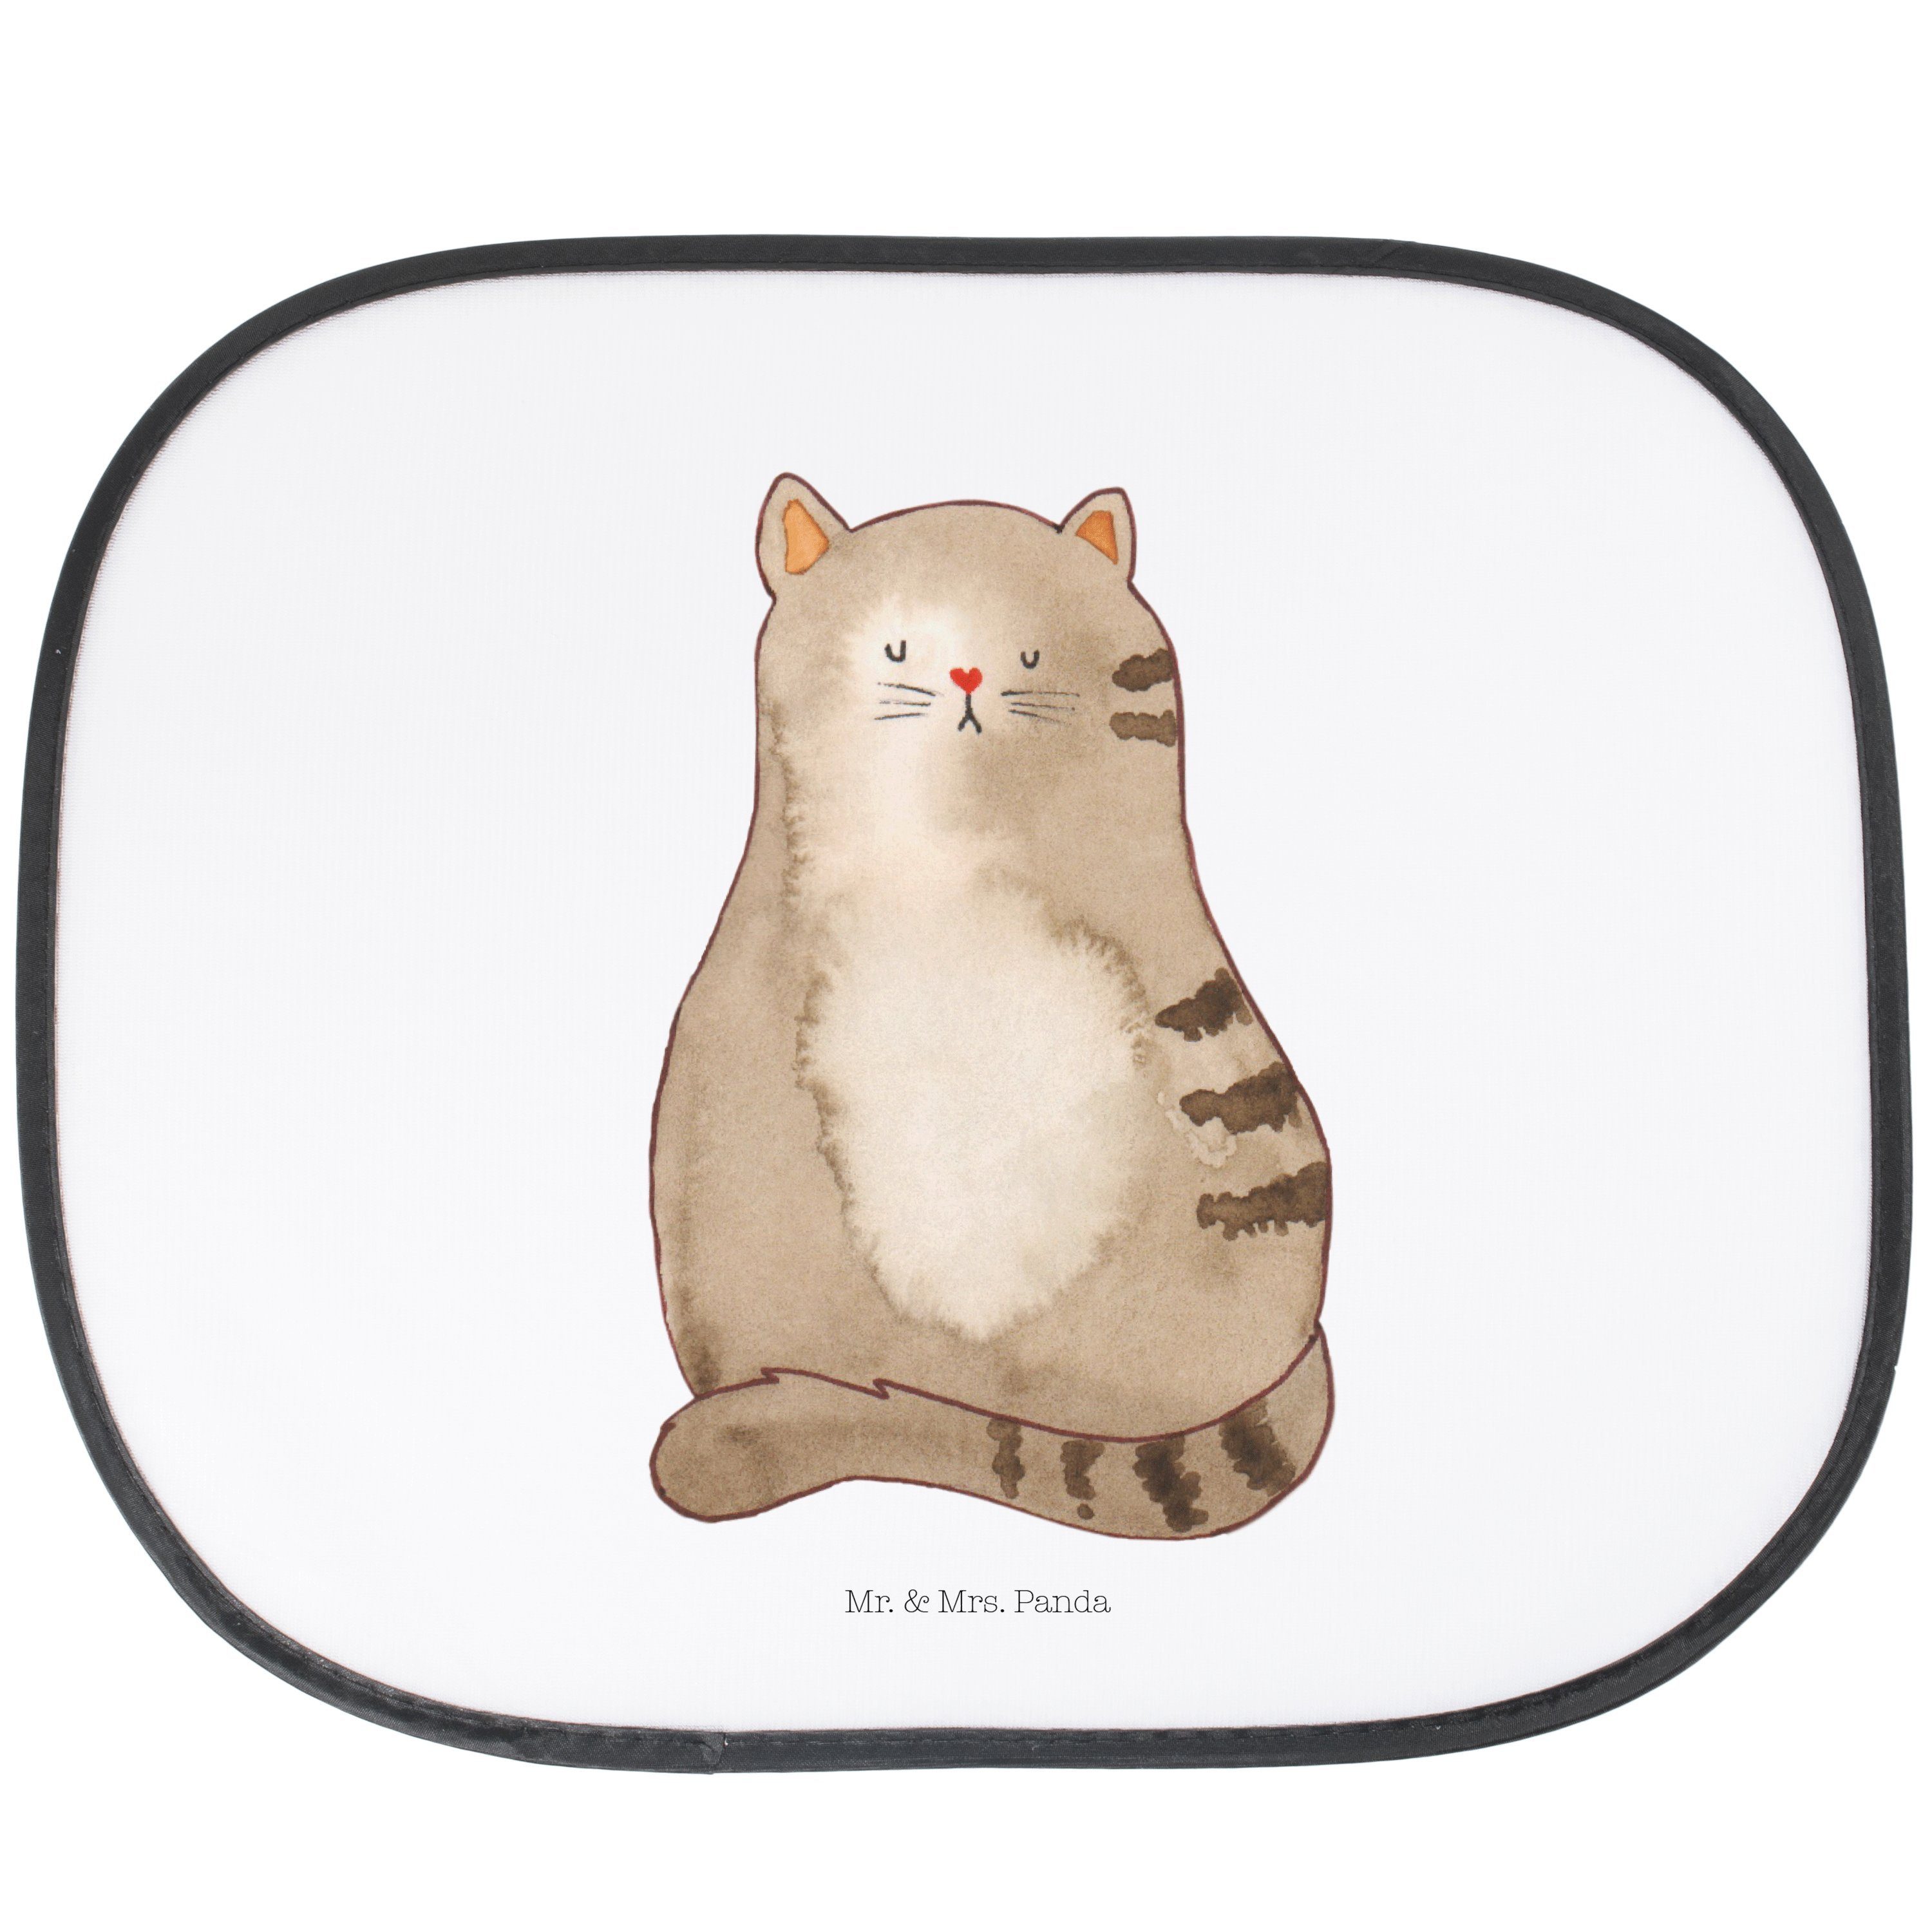 Sonnenschutz Katze sitzend - Weiß - Geschenk, Katzenbesitzerin, Katzenmotiv, Liebe, Mr. & Mrs. Panda, Seidenmatt